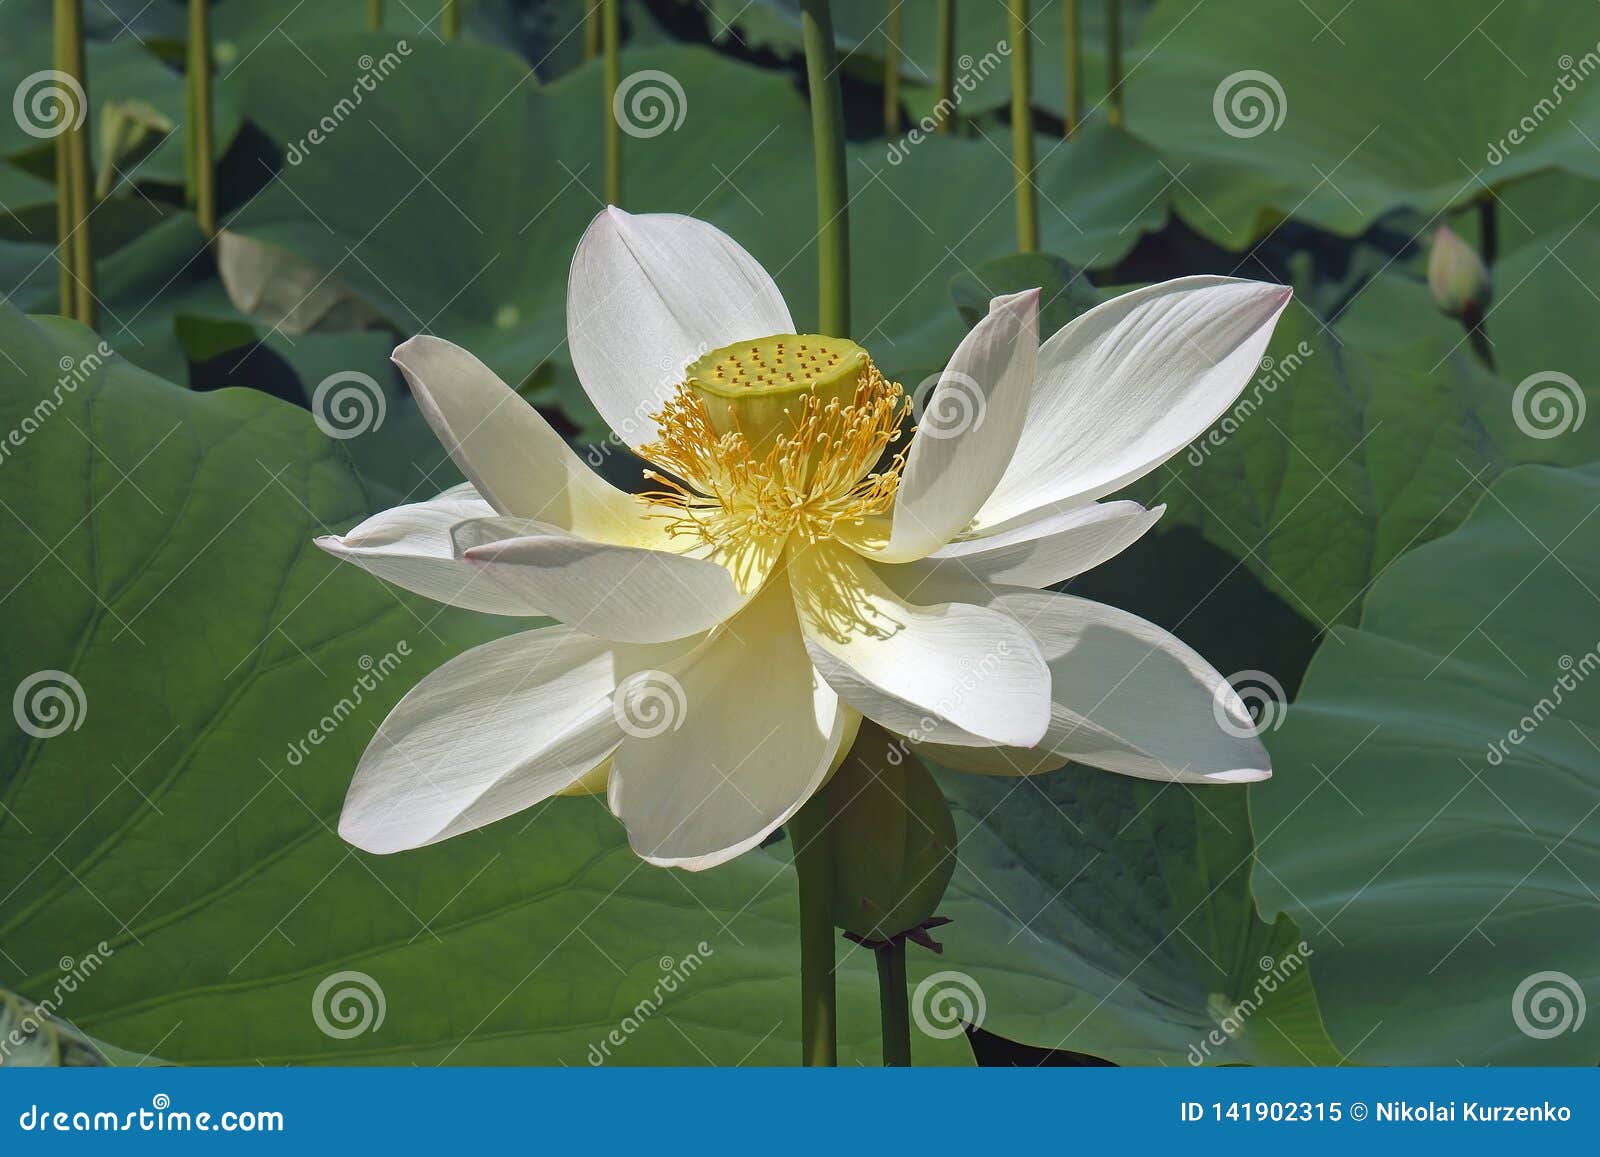 Horticulture lotus flower